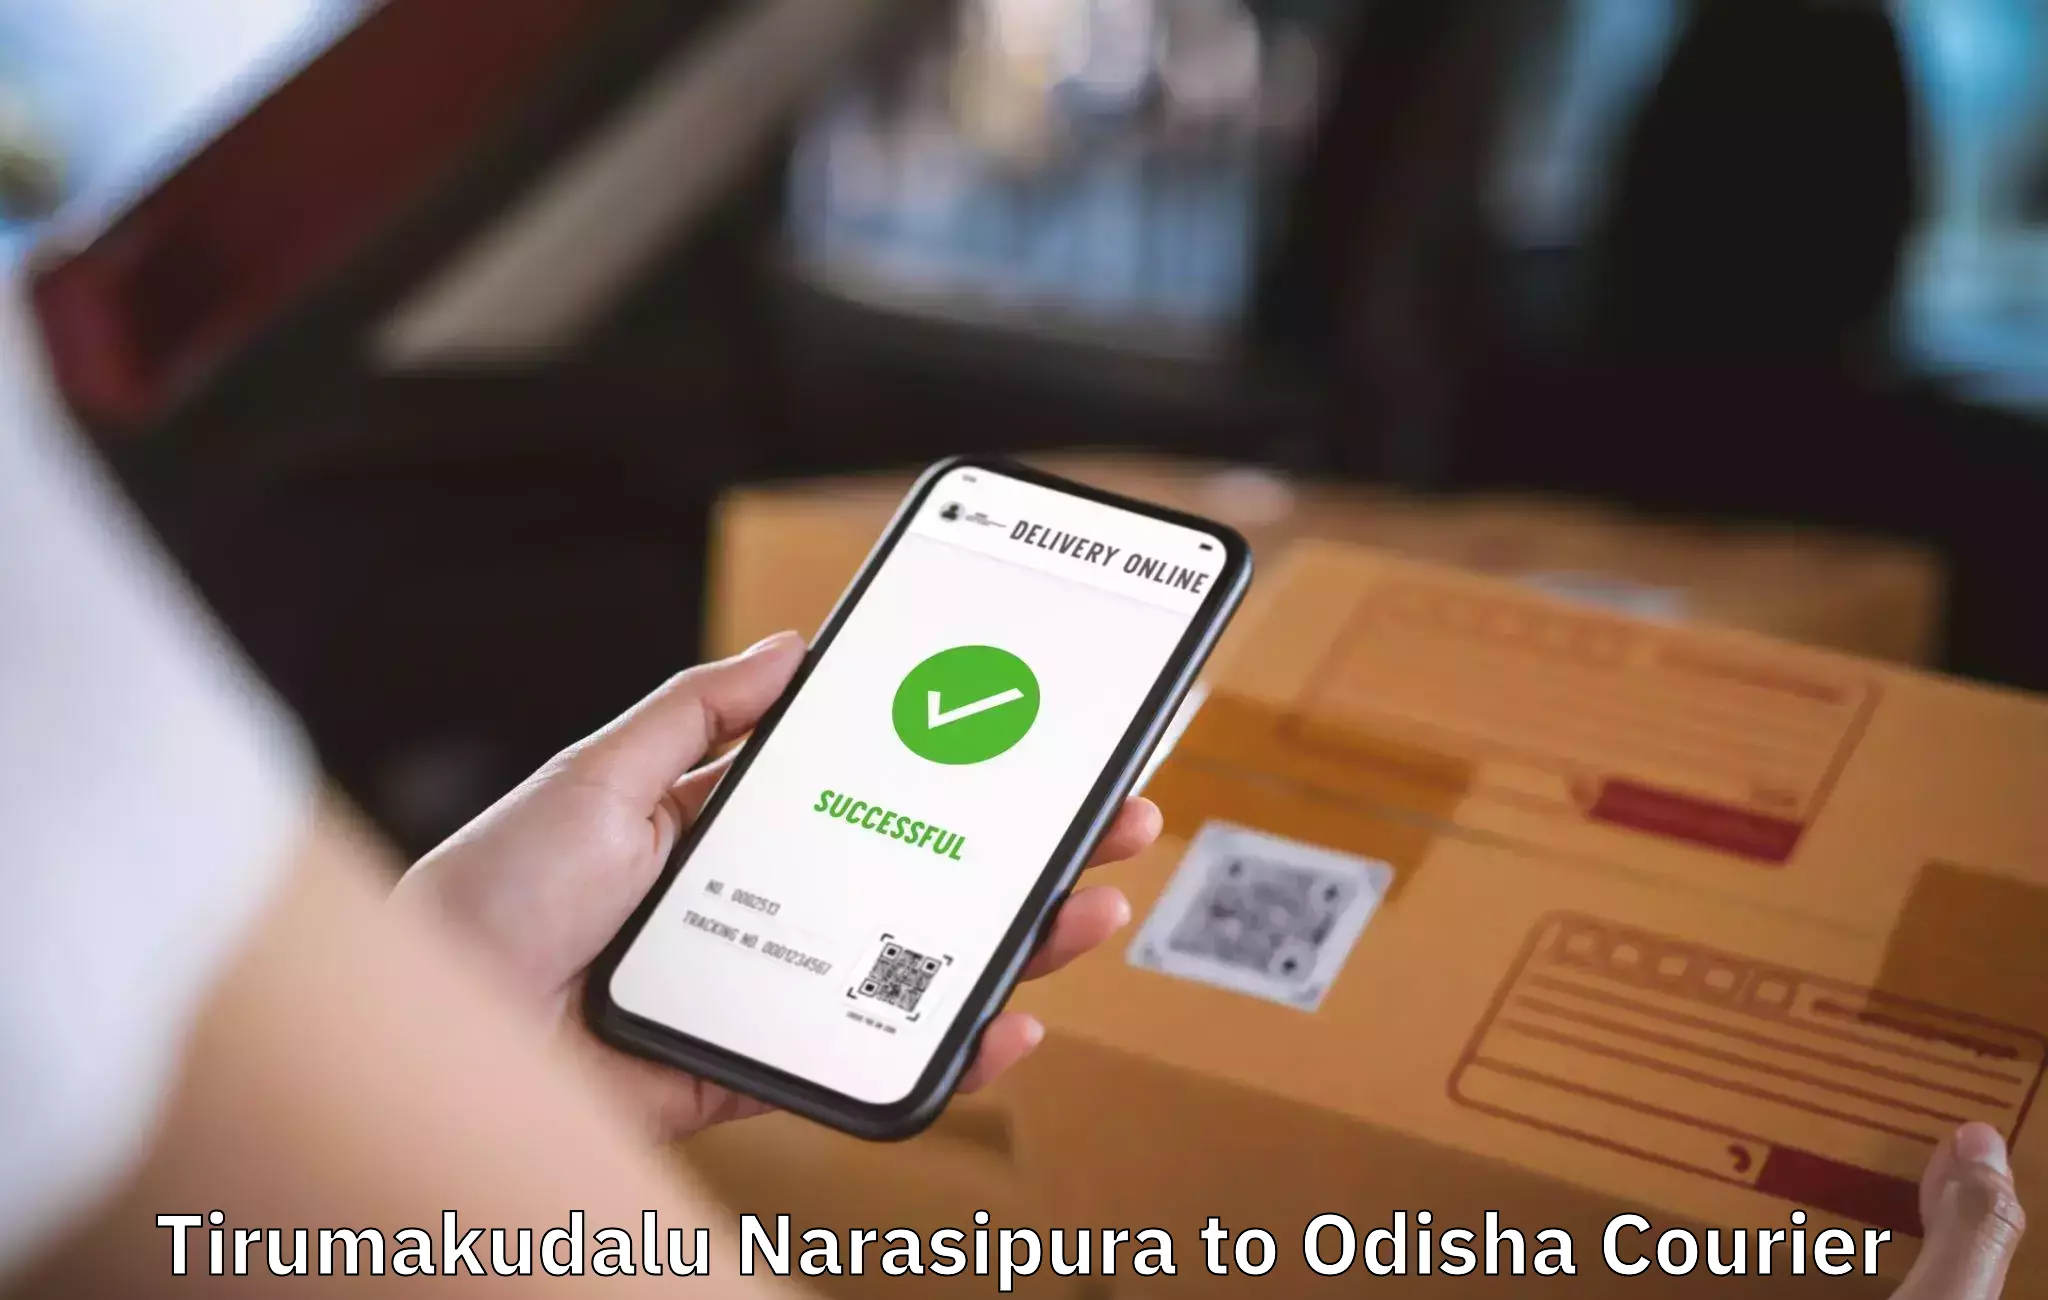 Furniture delivery service Tirumakudalu Narasipura to Jagannathprasad